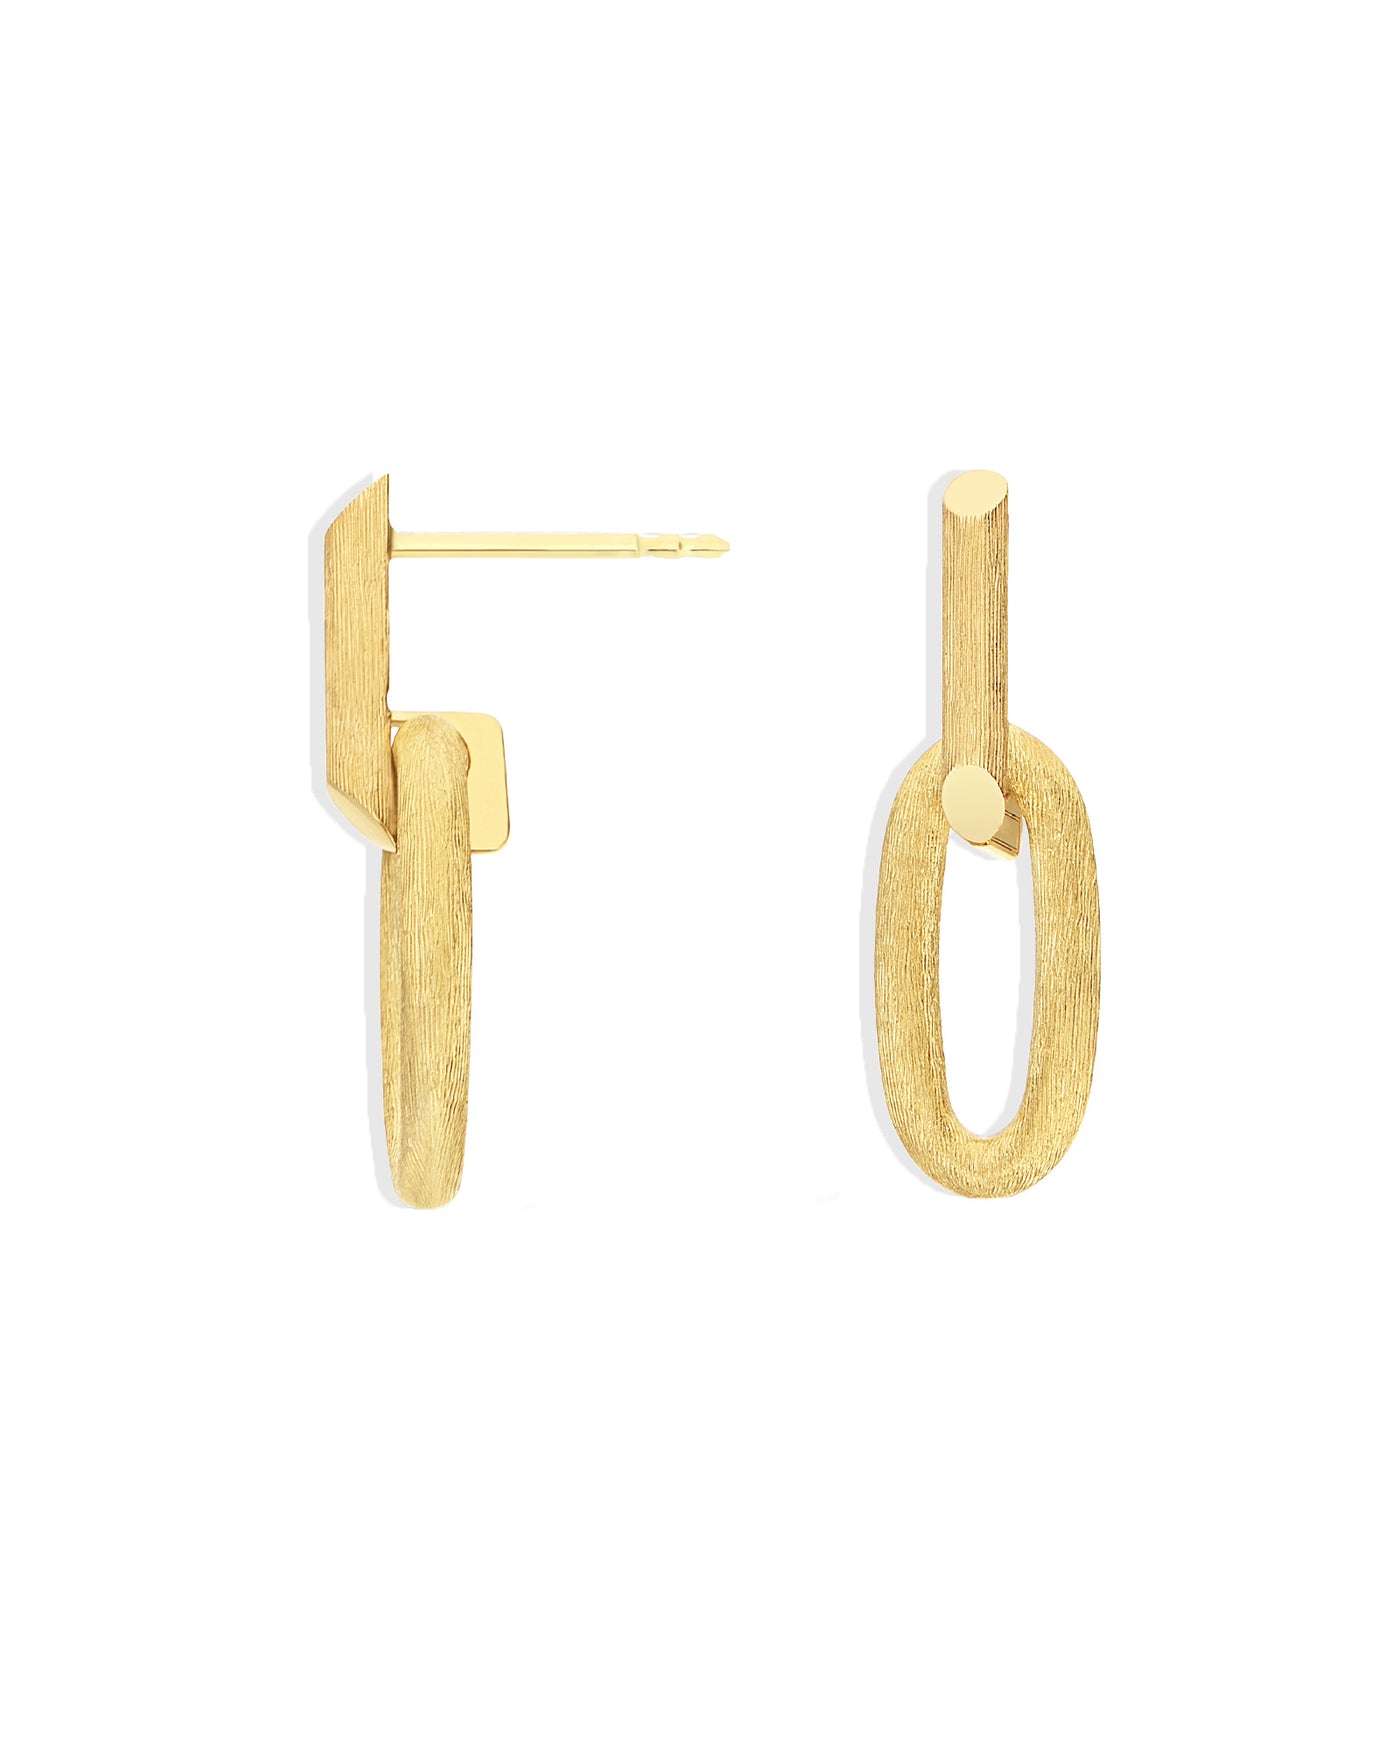 "Libera" gold elegant oval earrings